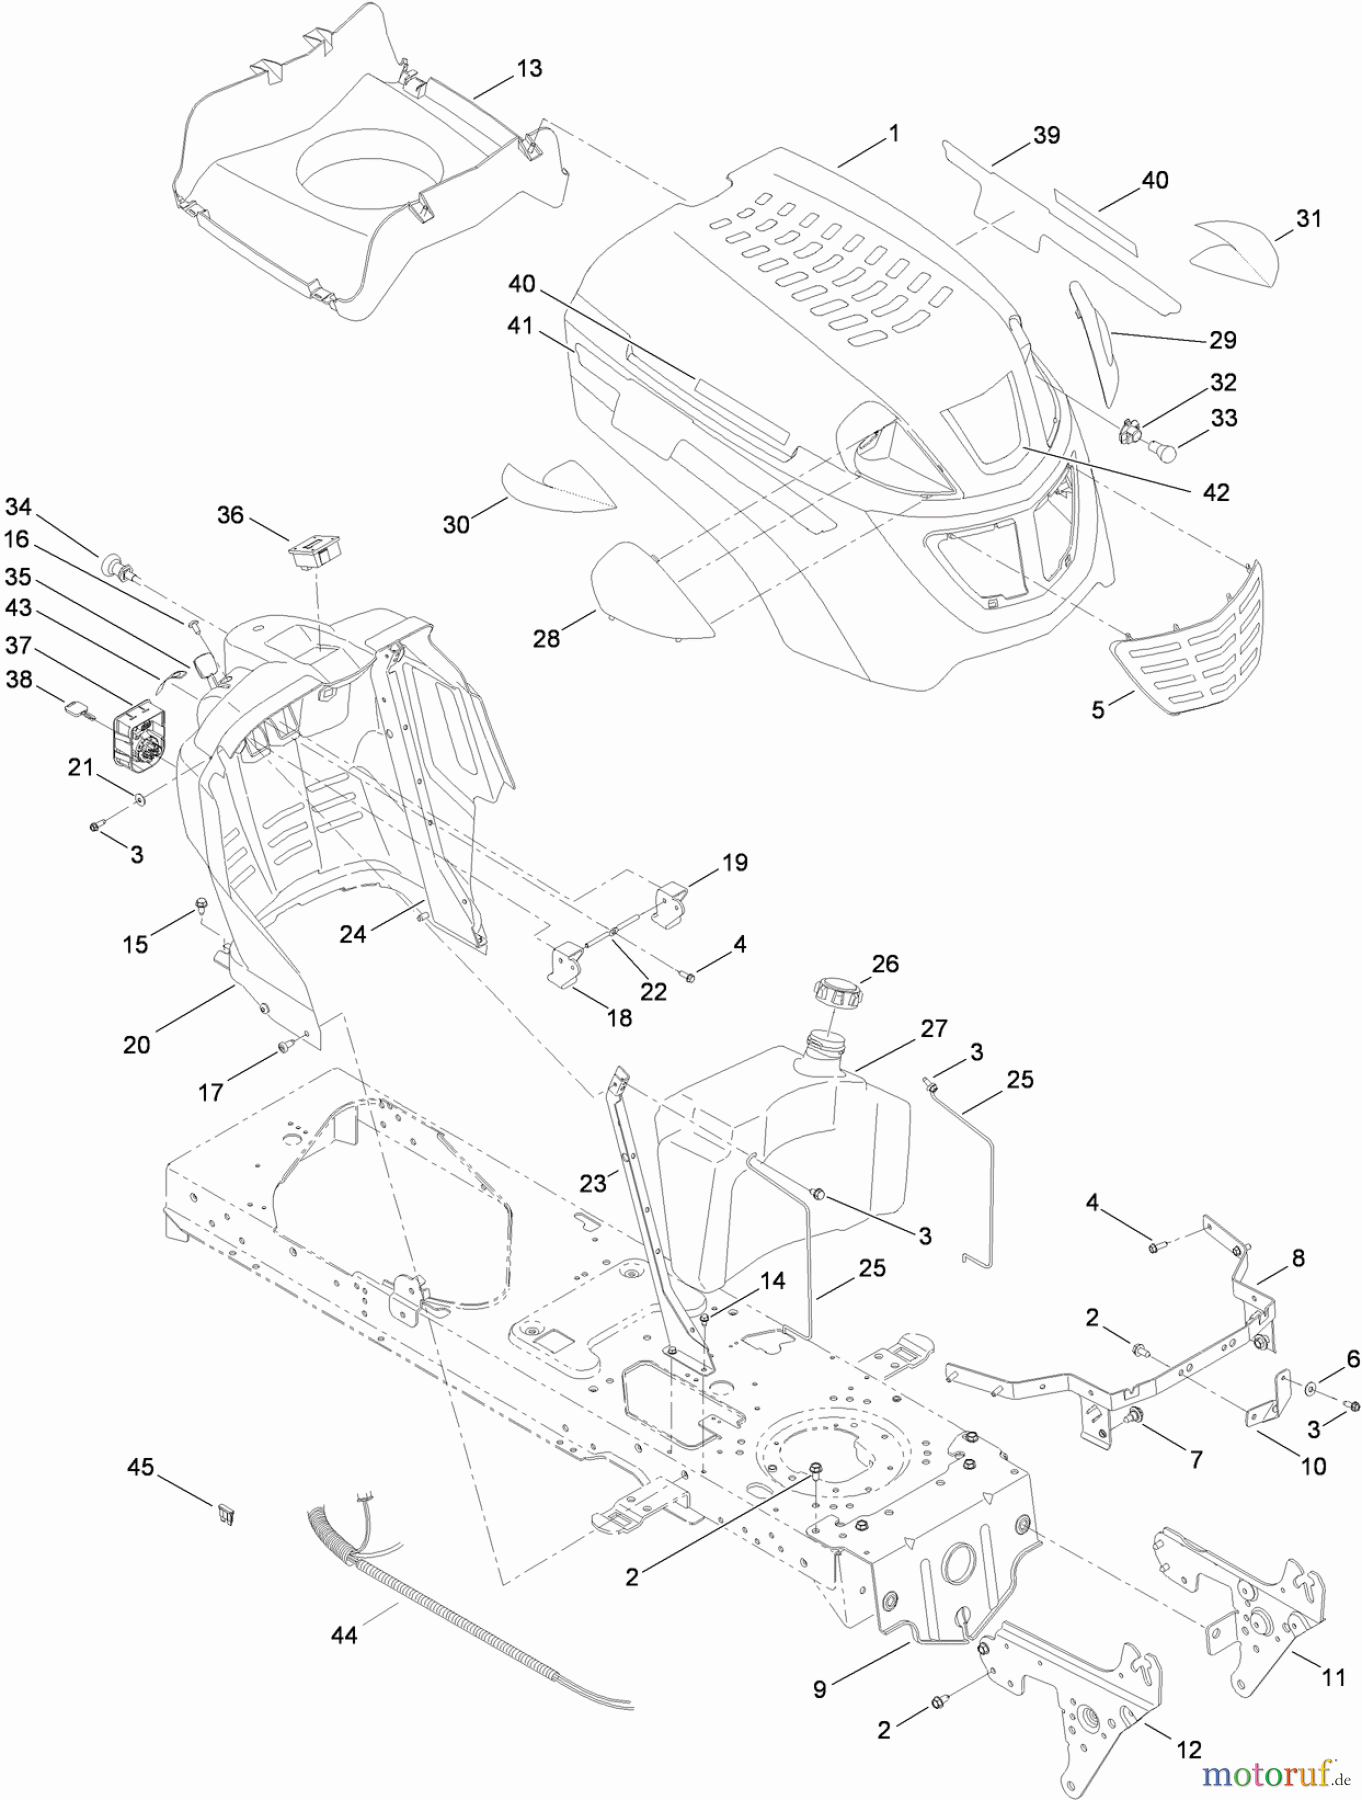  Toro Neu Mowers, Lawn & Garden Tractor Seite 1 14AQ81RP848 (GT2200) - Toro GT2200 Garden Tractor, 2009 (1-1) FUEL TANK, HOOD AND DASH ASSEMBLY